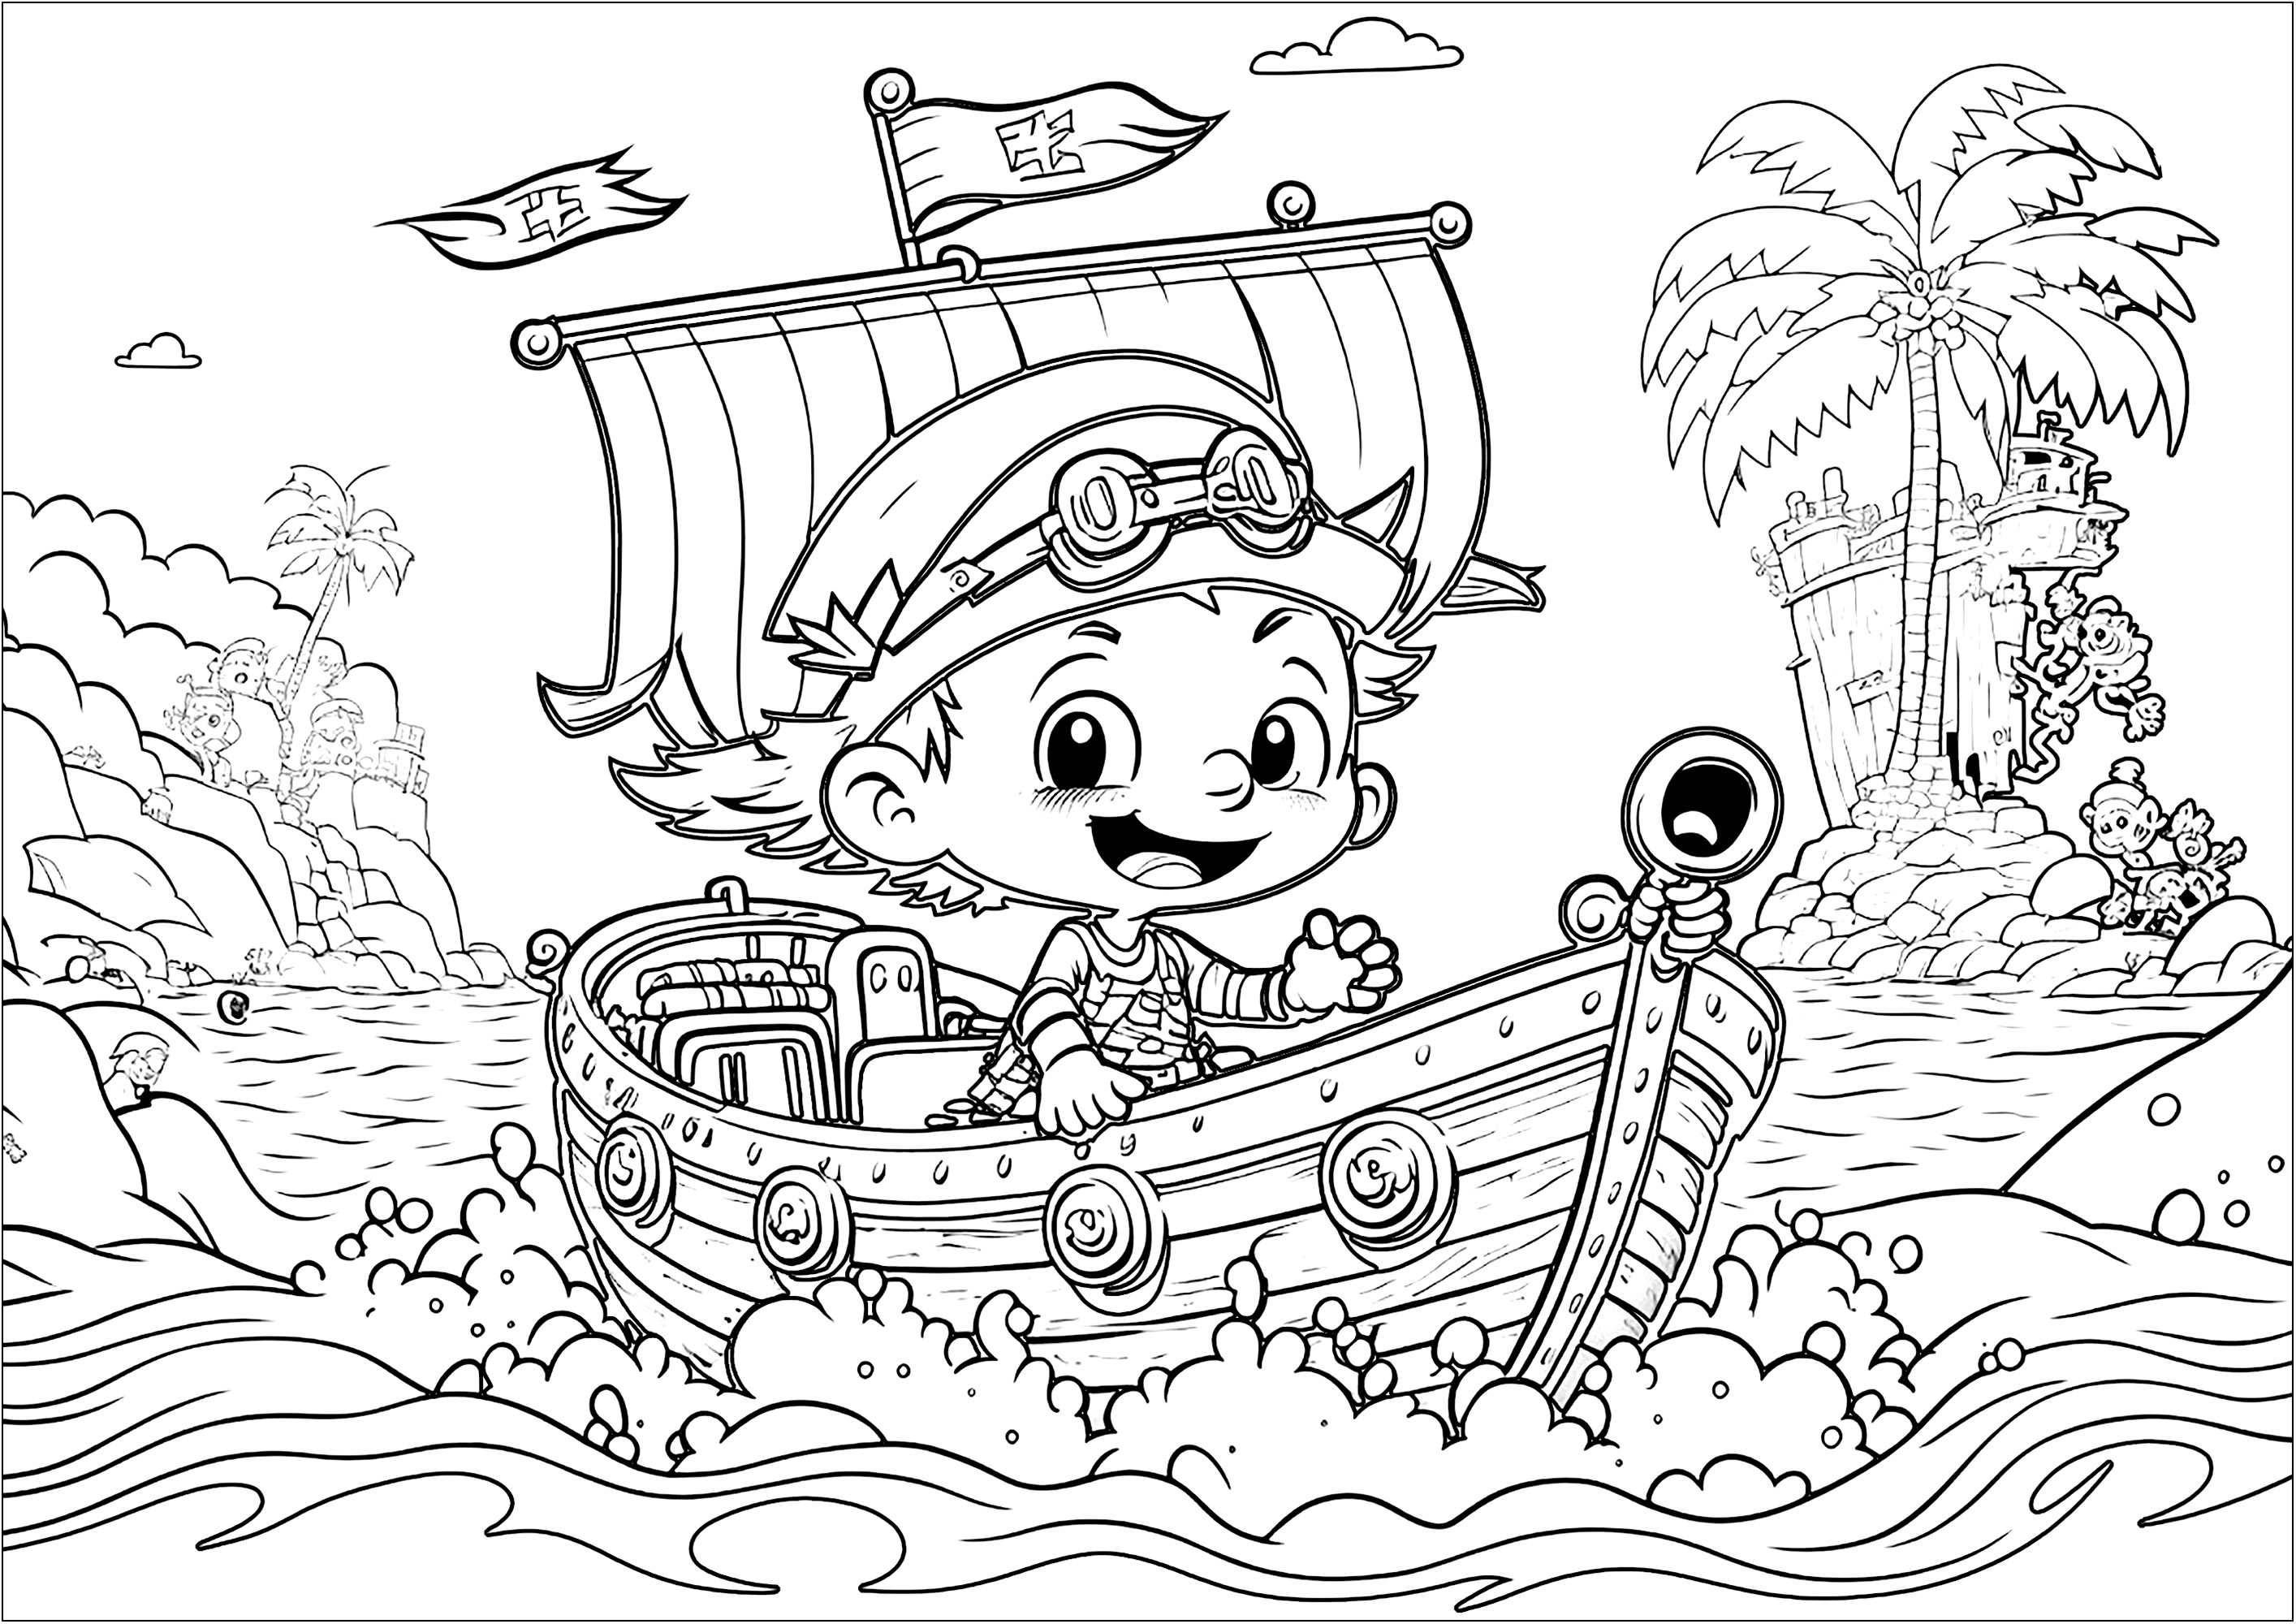 Color By Number. Divertido Desenho Animado Infantil Pirata Colorir